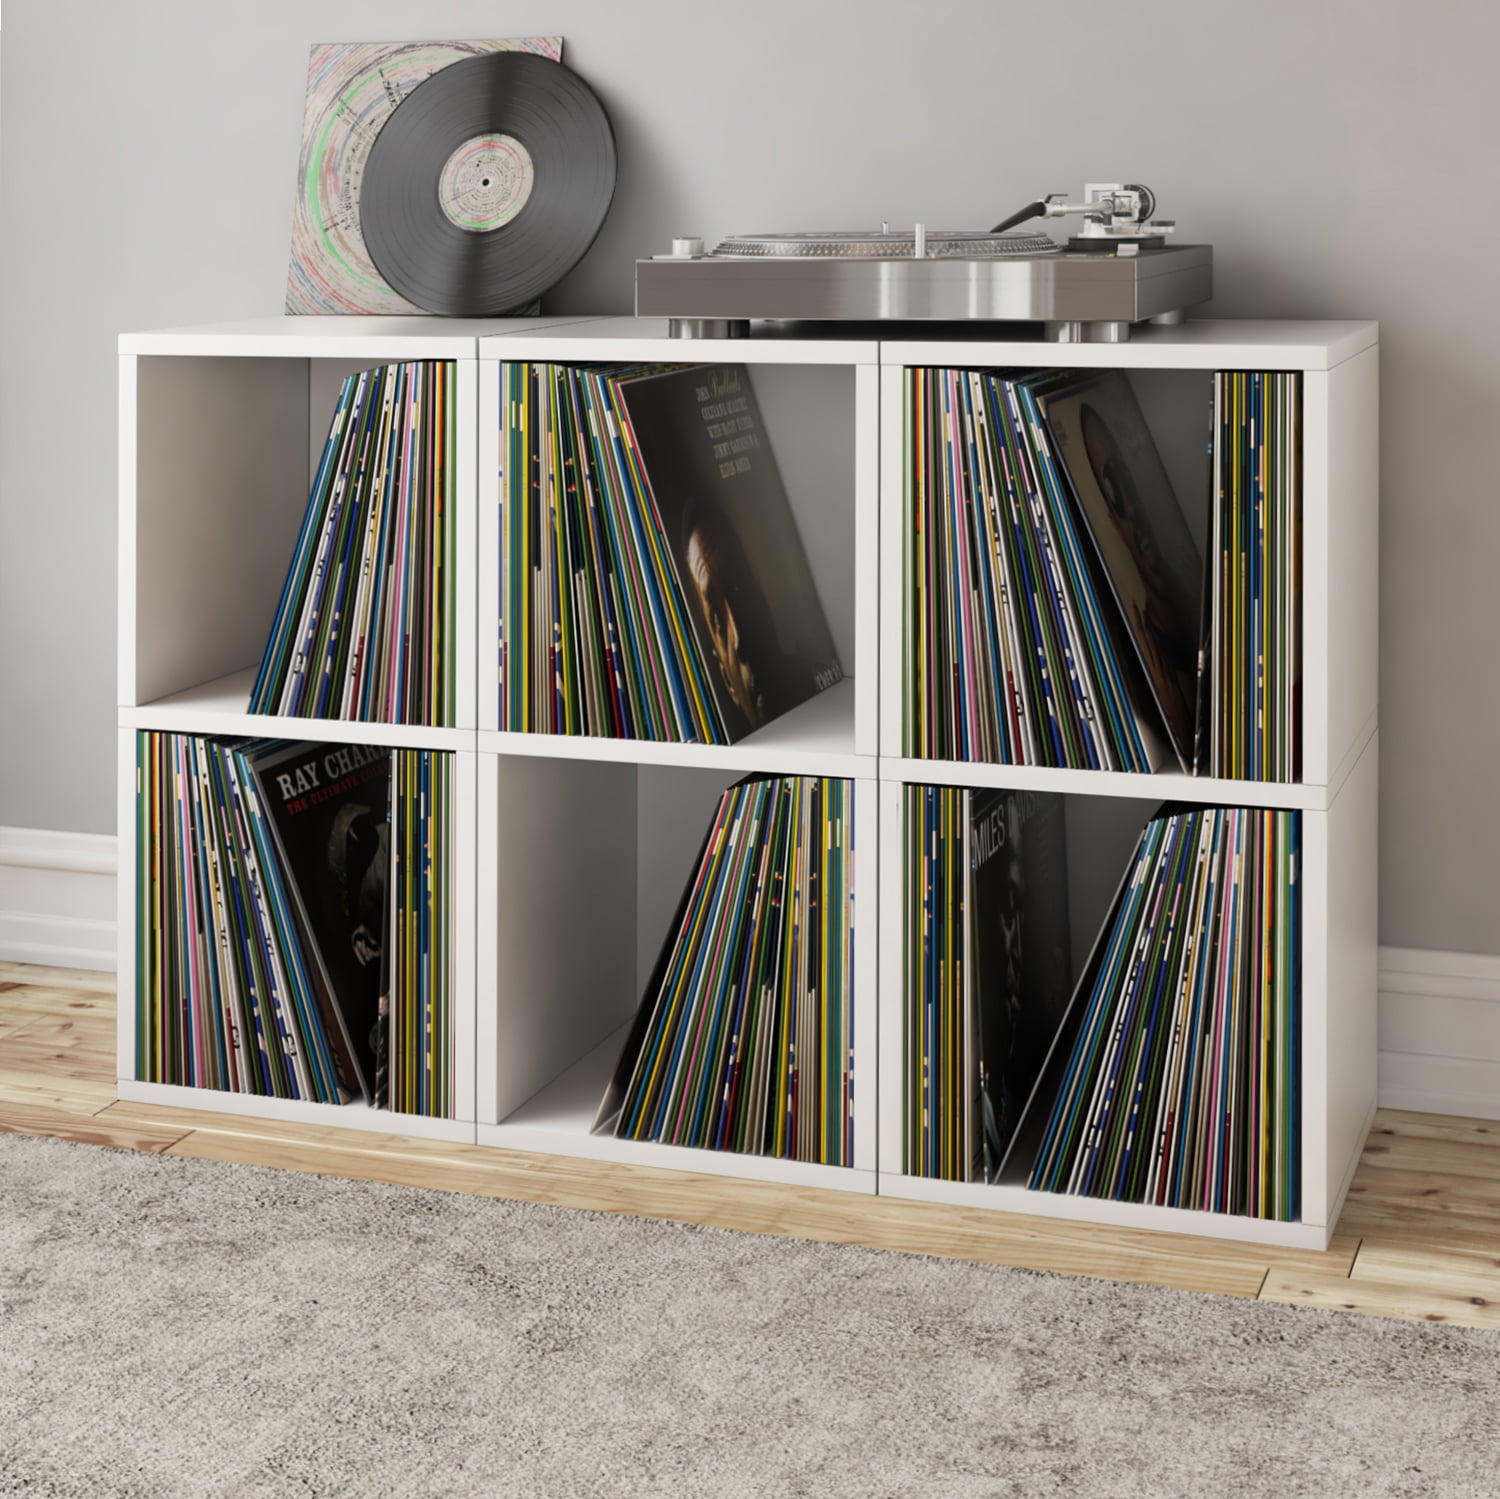 Vinyl Storage Series - Organize LP's in Style – Modern Shelving